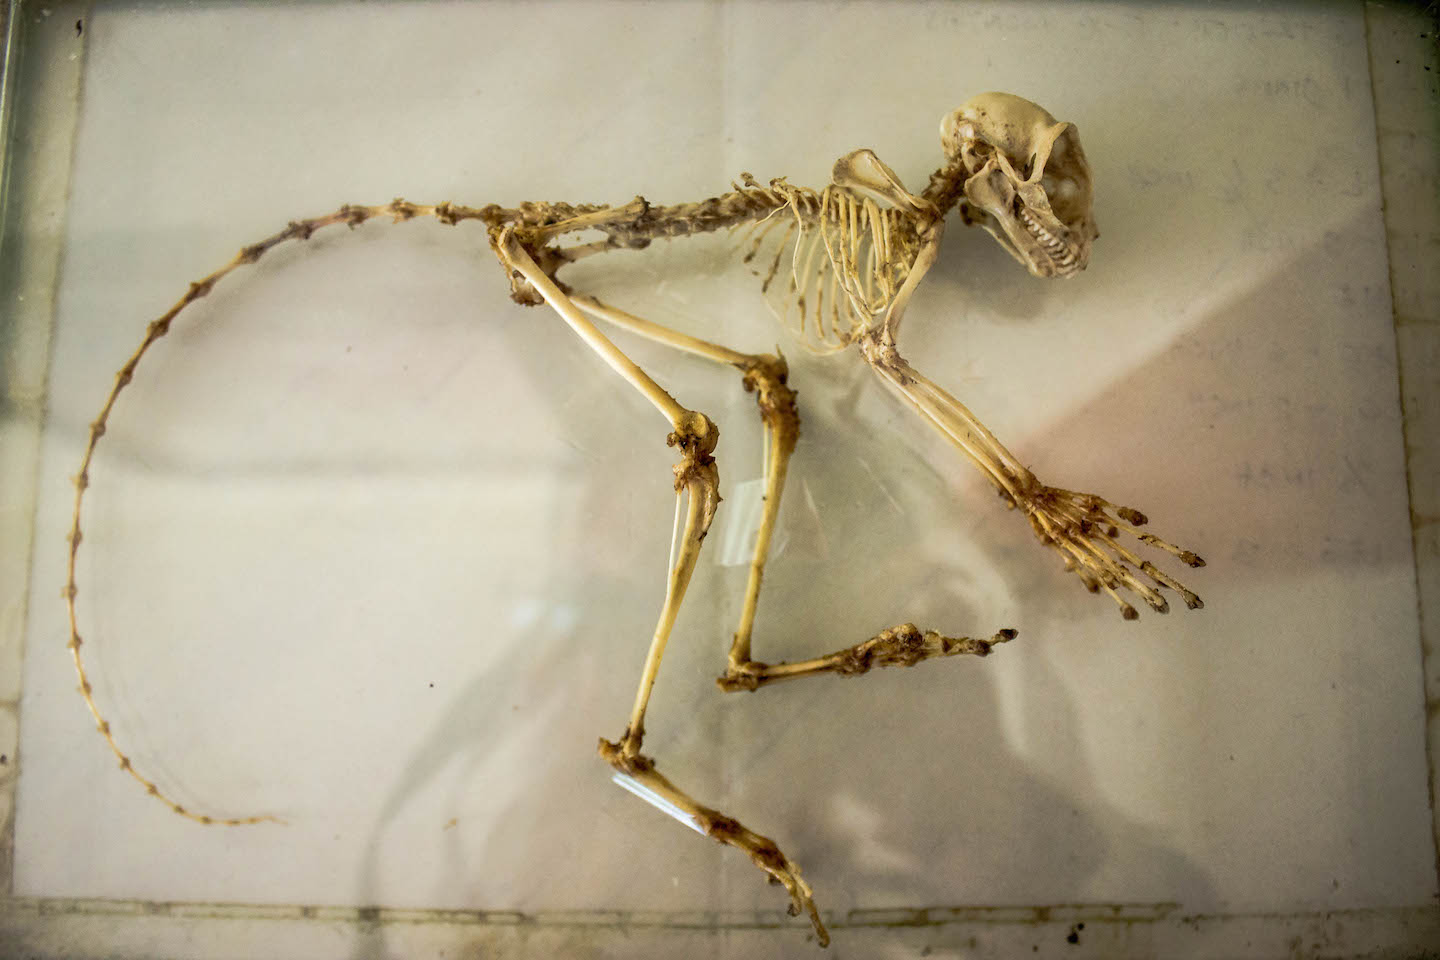 Tarsier skeleton, Bohol, Philippines